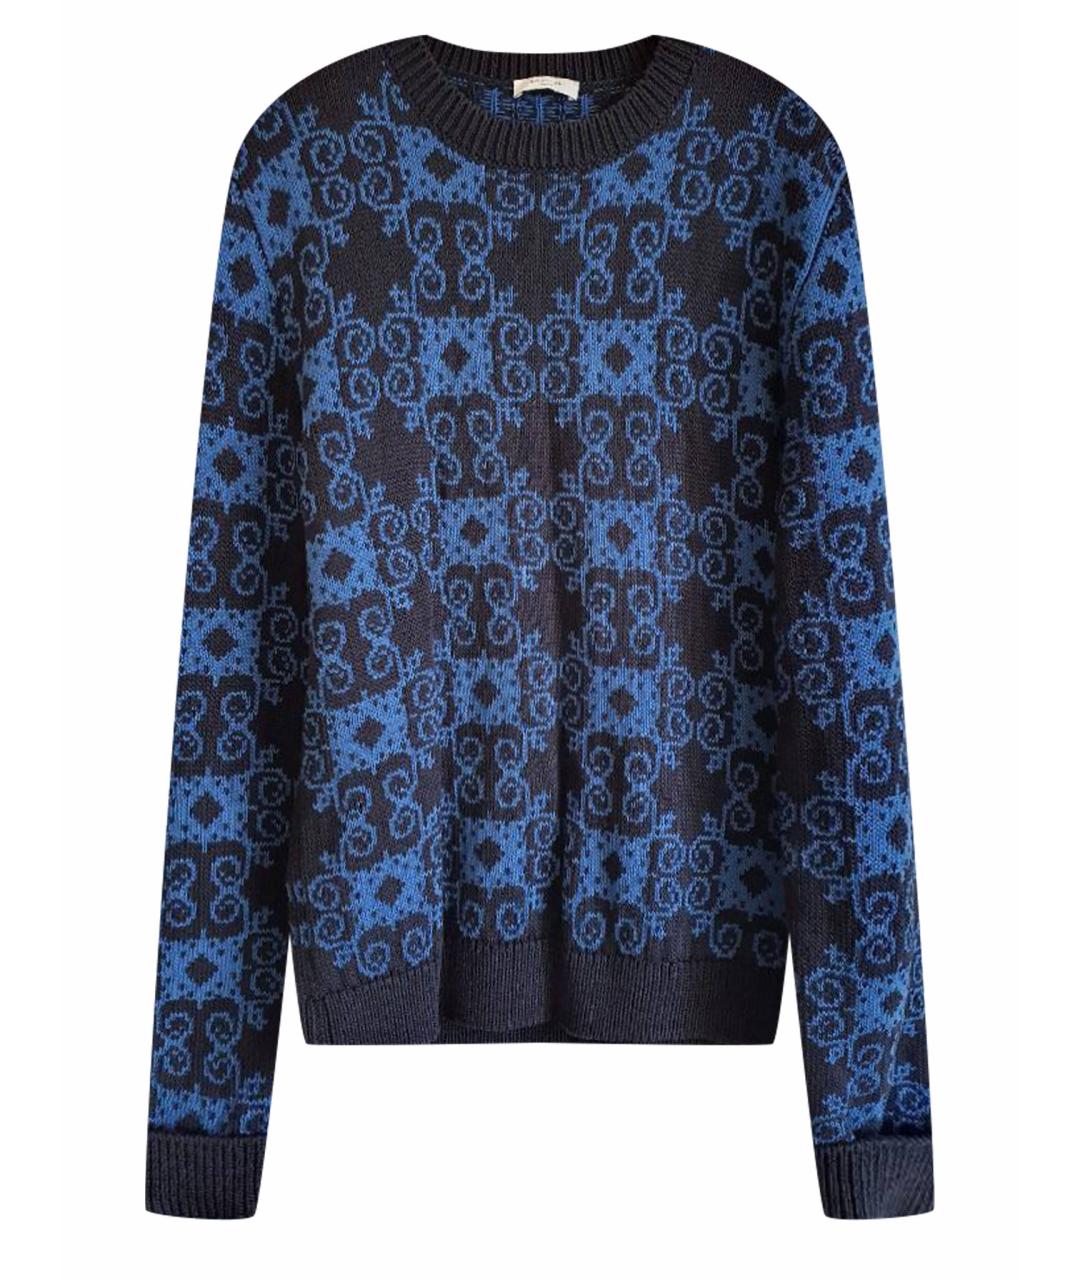 BOGLIOLI Темно-синий хлопковый джемпер / свитер, фото 1